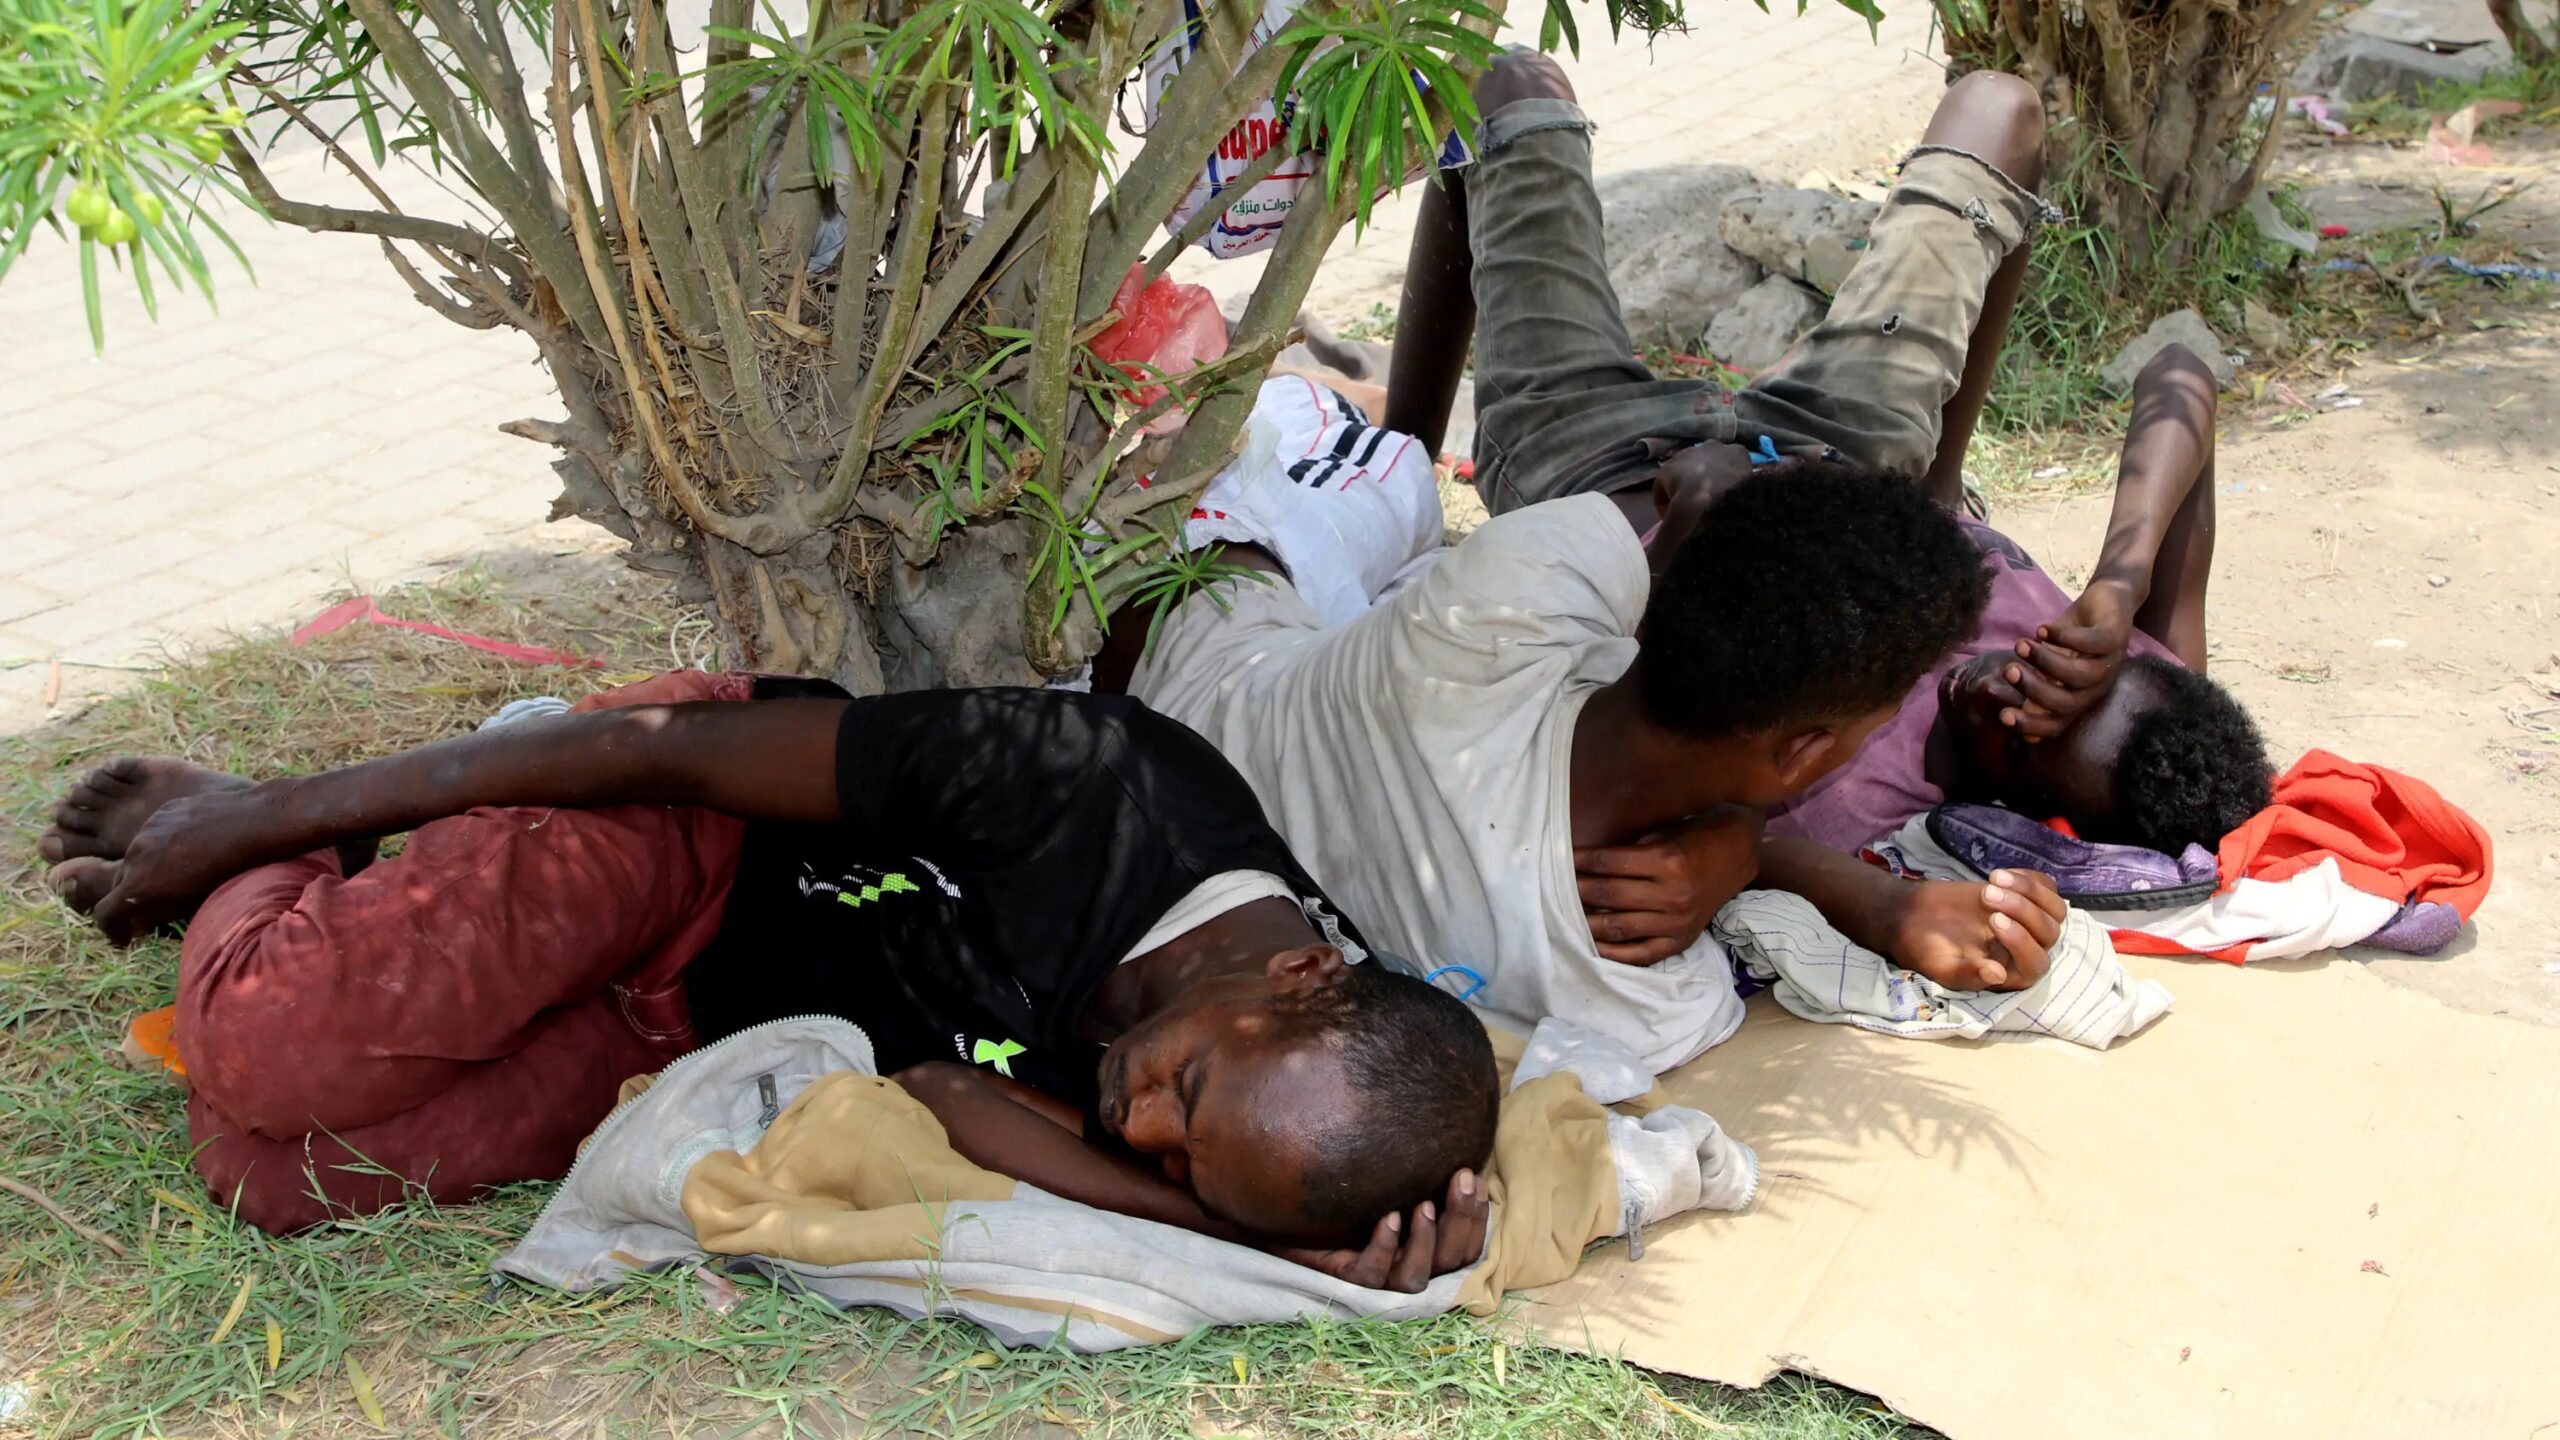 Saudi Arabia guards killed hundreds of Ethiopians along Yemen border, says report